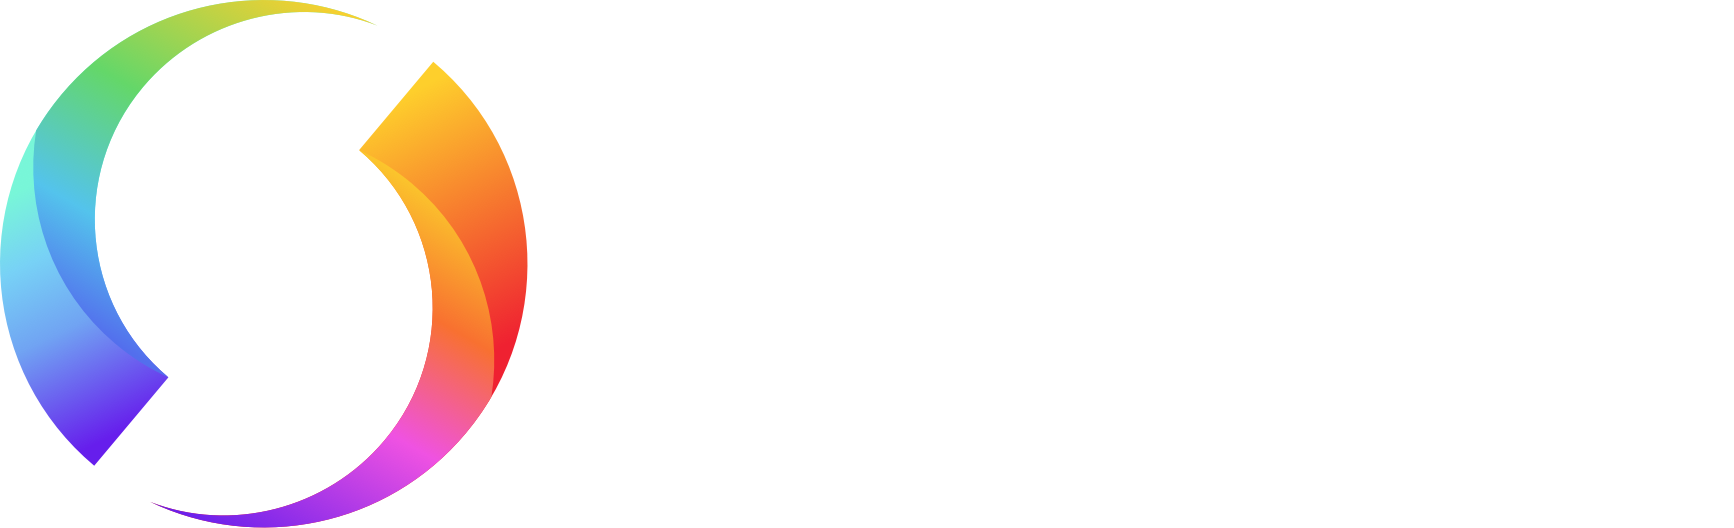 Swish Logotype